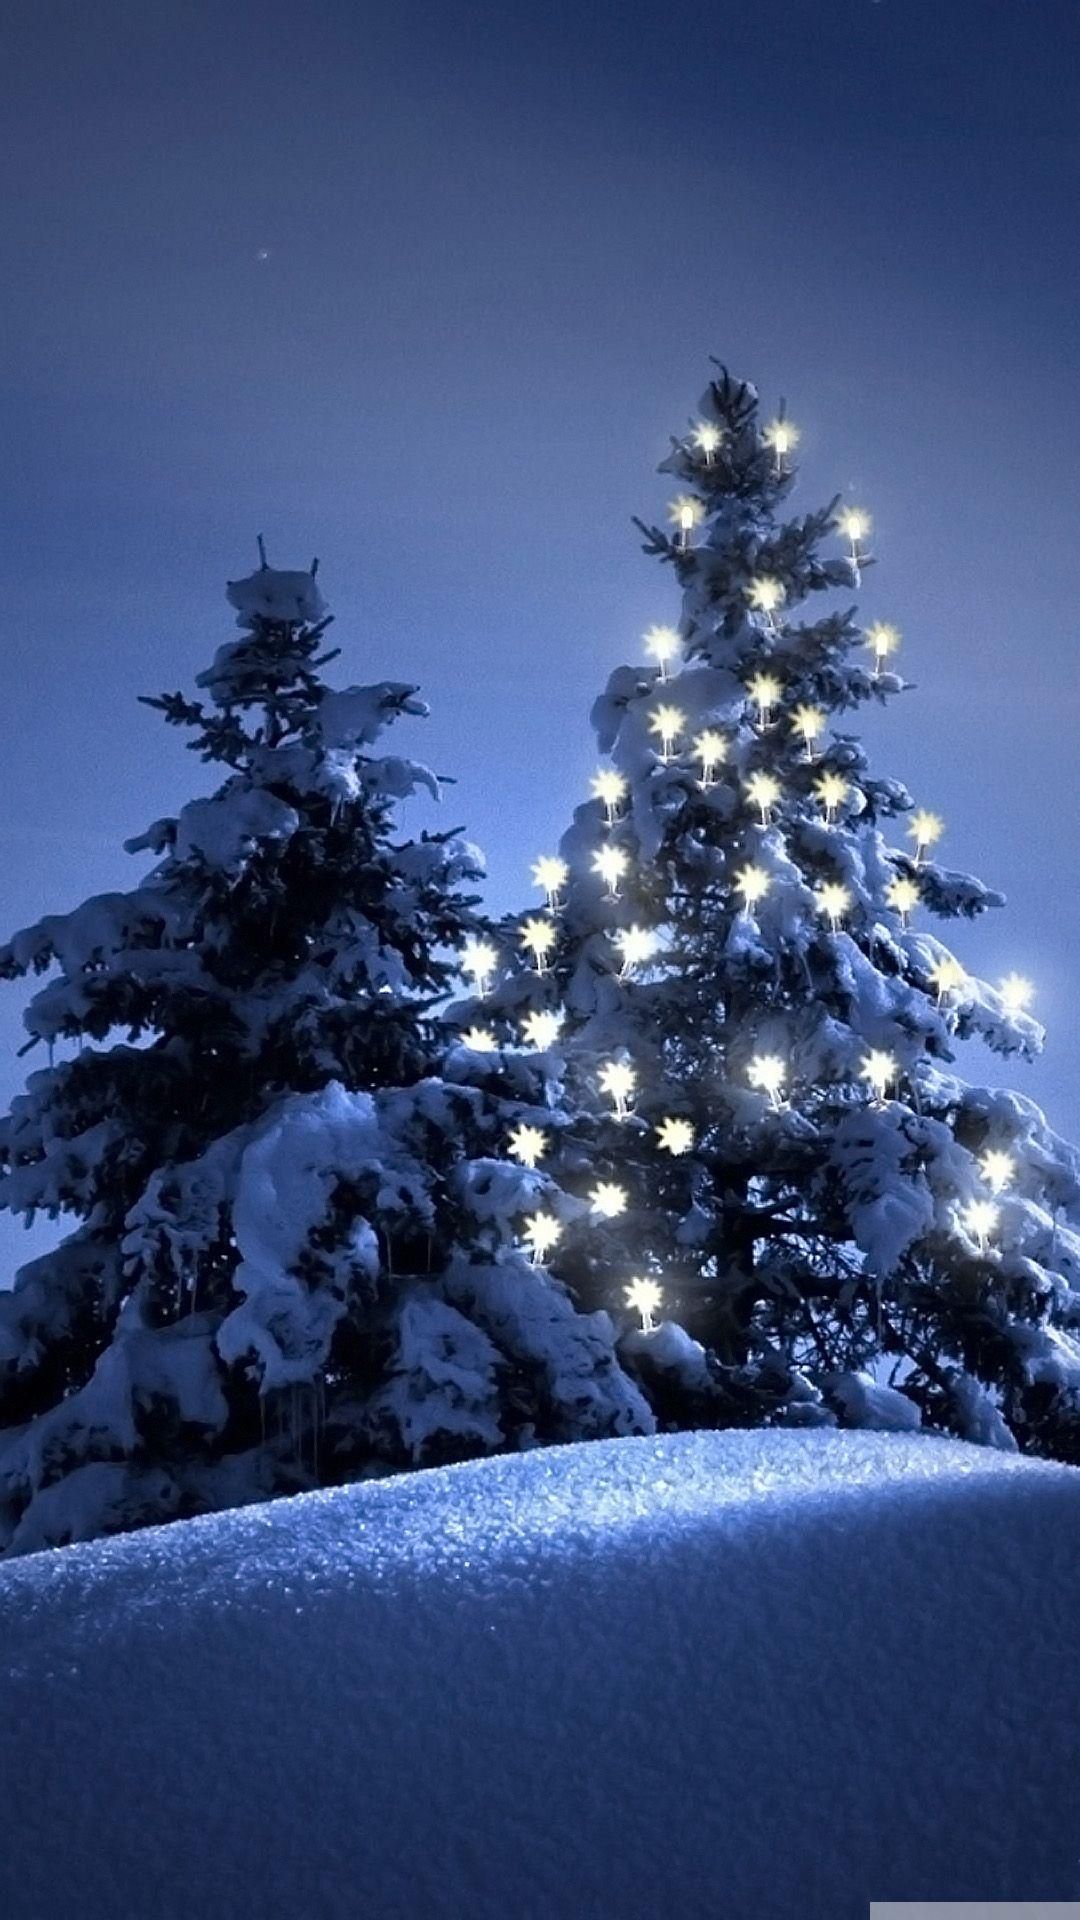 Snow Christmas Tree Winter IPhone 6 Wallpaper. Wallpaper Iphone Christmas, Christmas Wallpaper, Christmas Tree Wallpaper Iphone